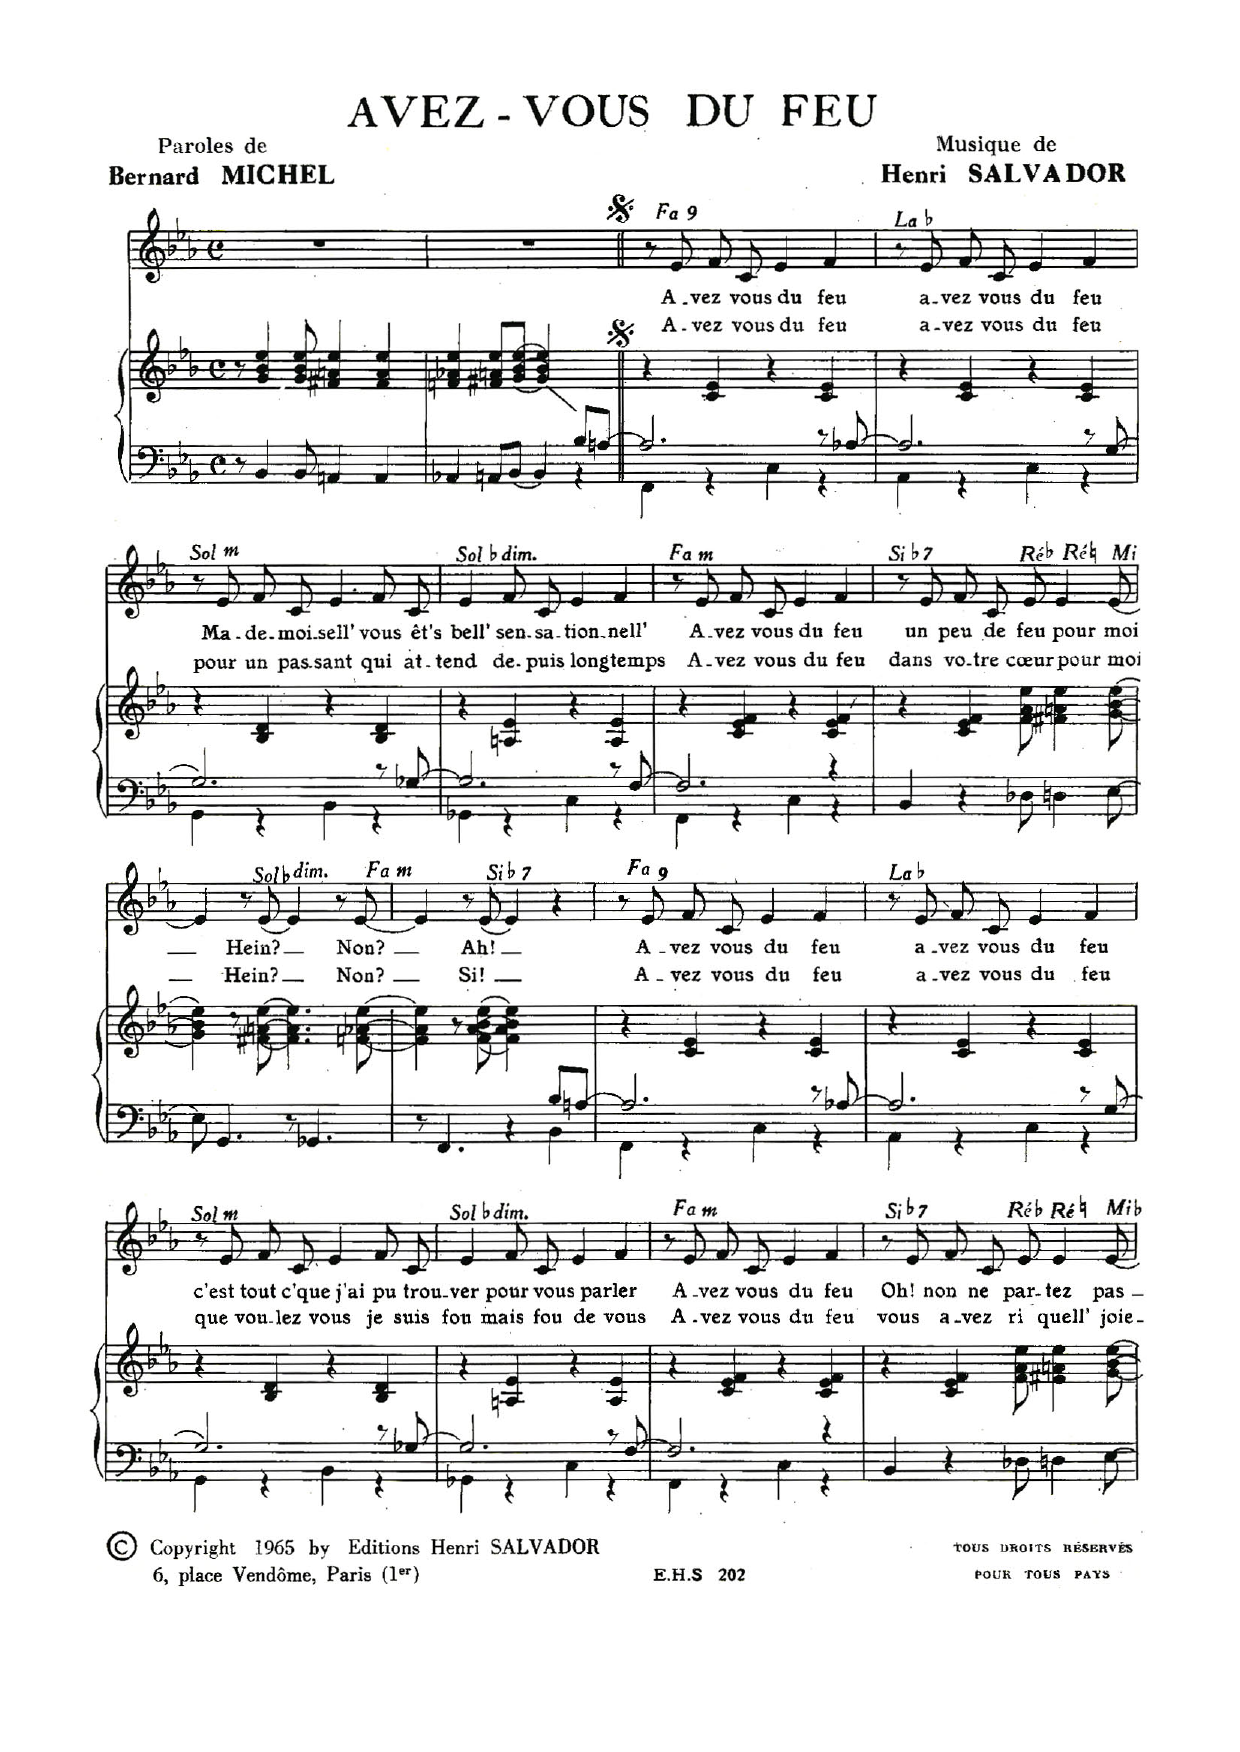 Henri Salvador Avez Vous Du Feu Sheet Music Notes & Chords for Piano & Vocal - Download or Print PDF